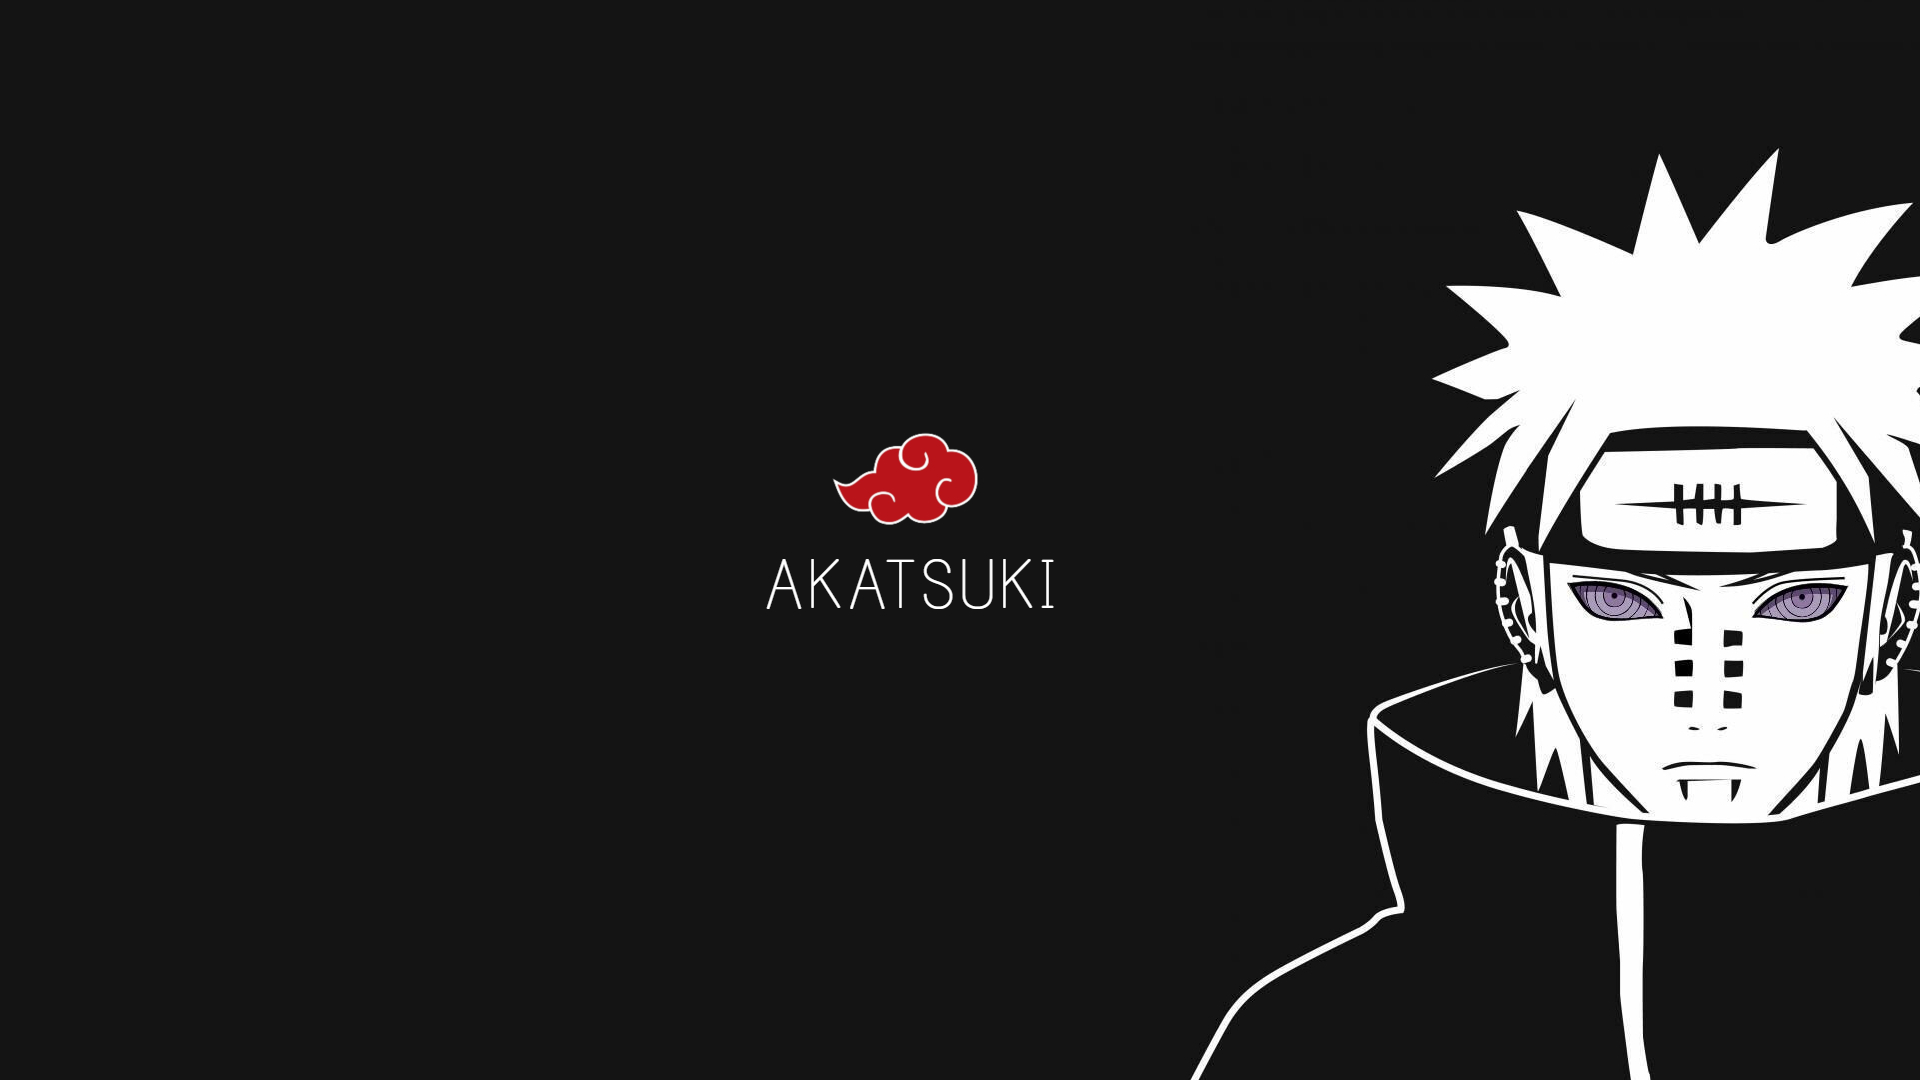 Akatsuki Naruto Wallpaper, HD Anime 4K Wallpapers, Images ...